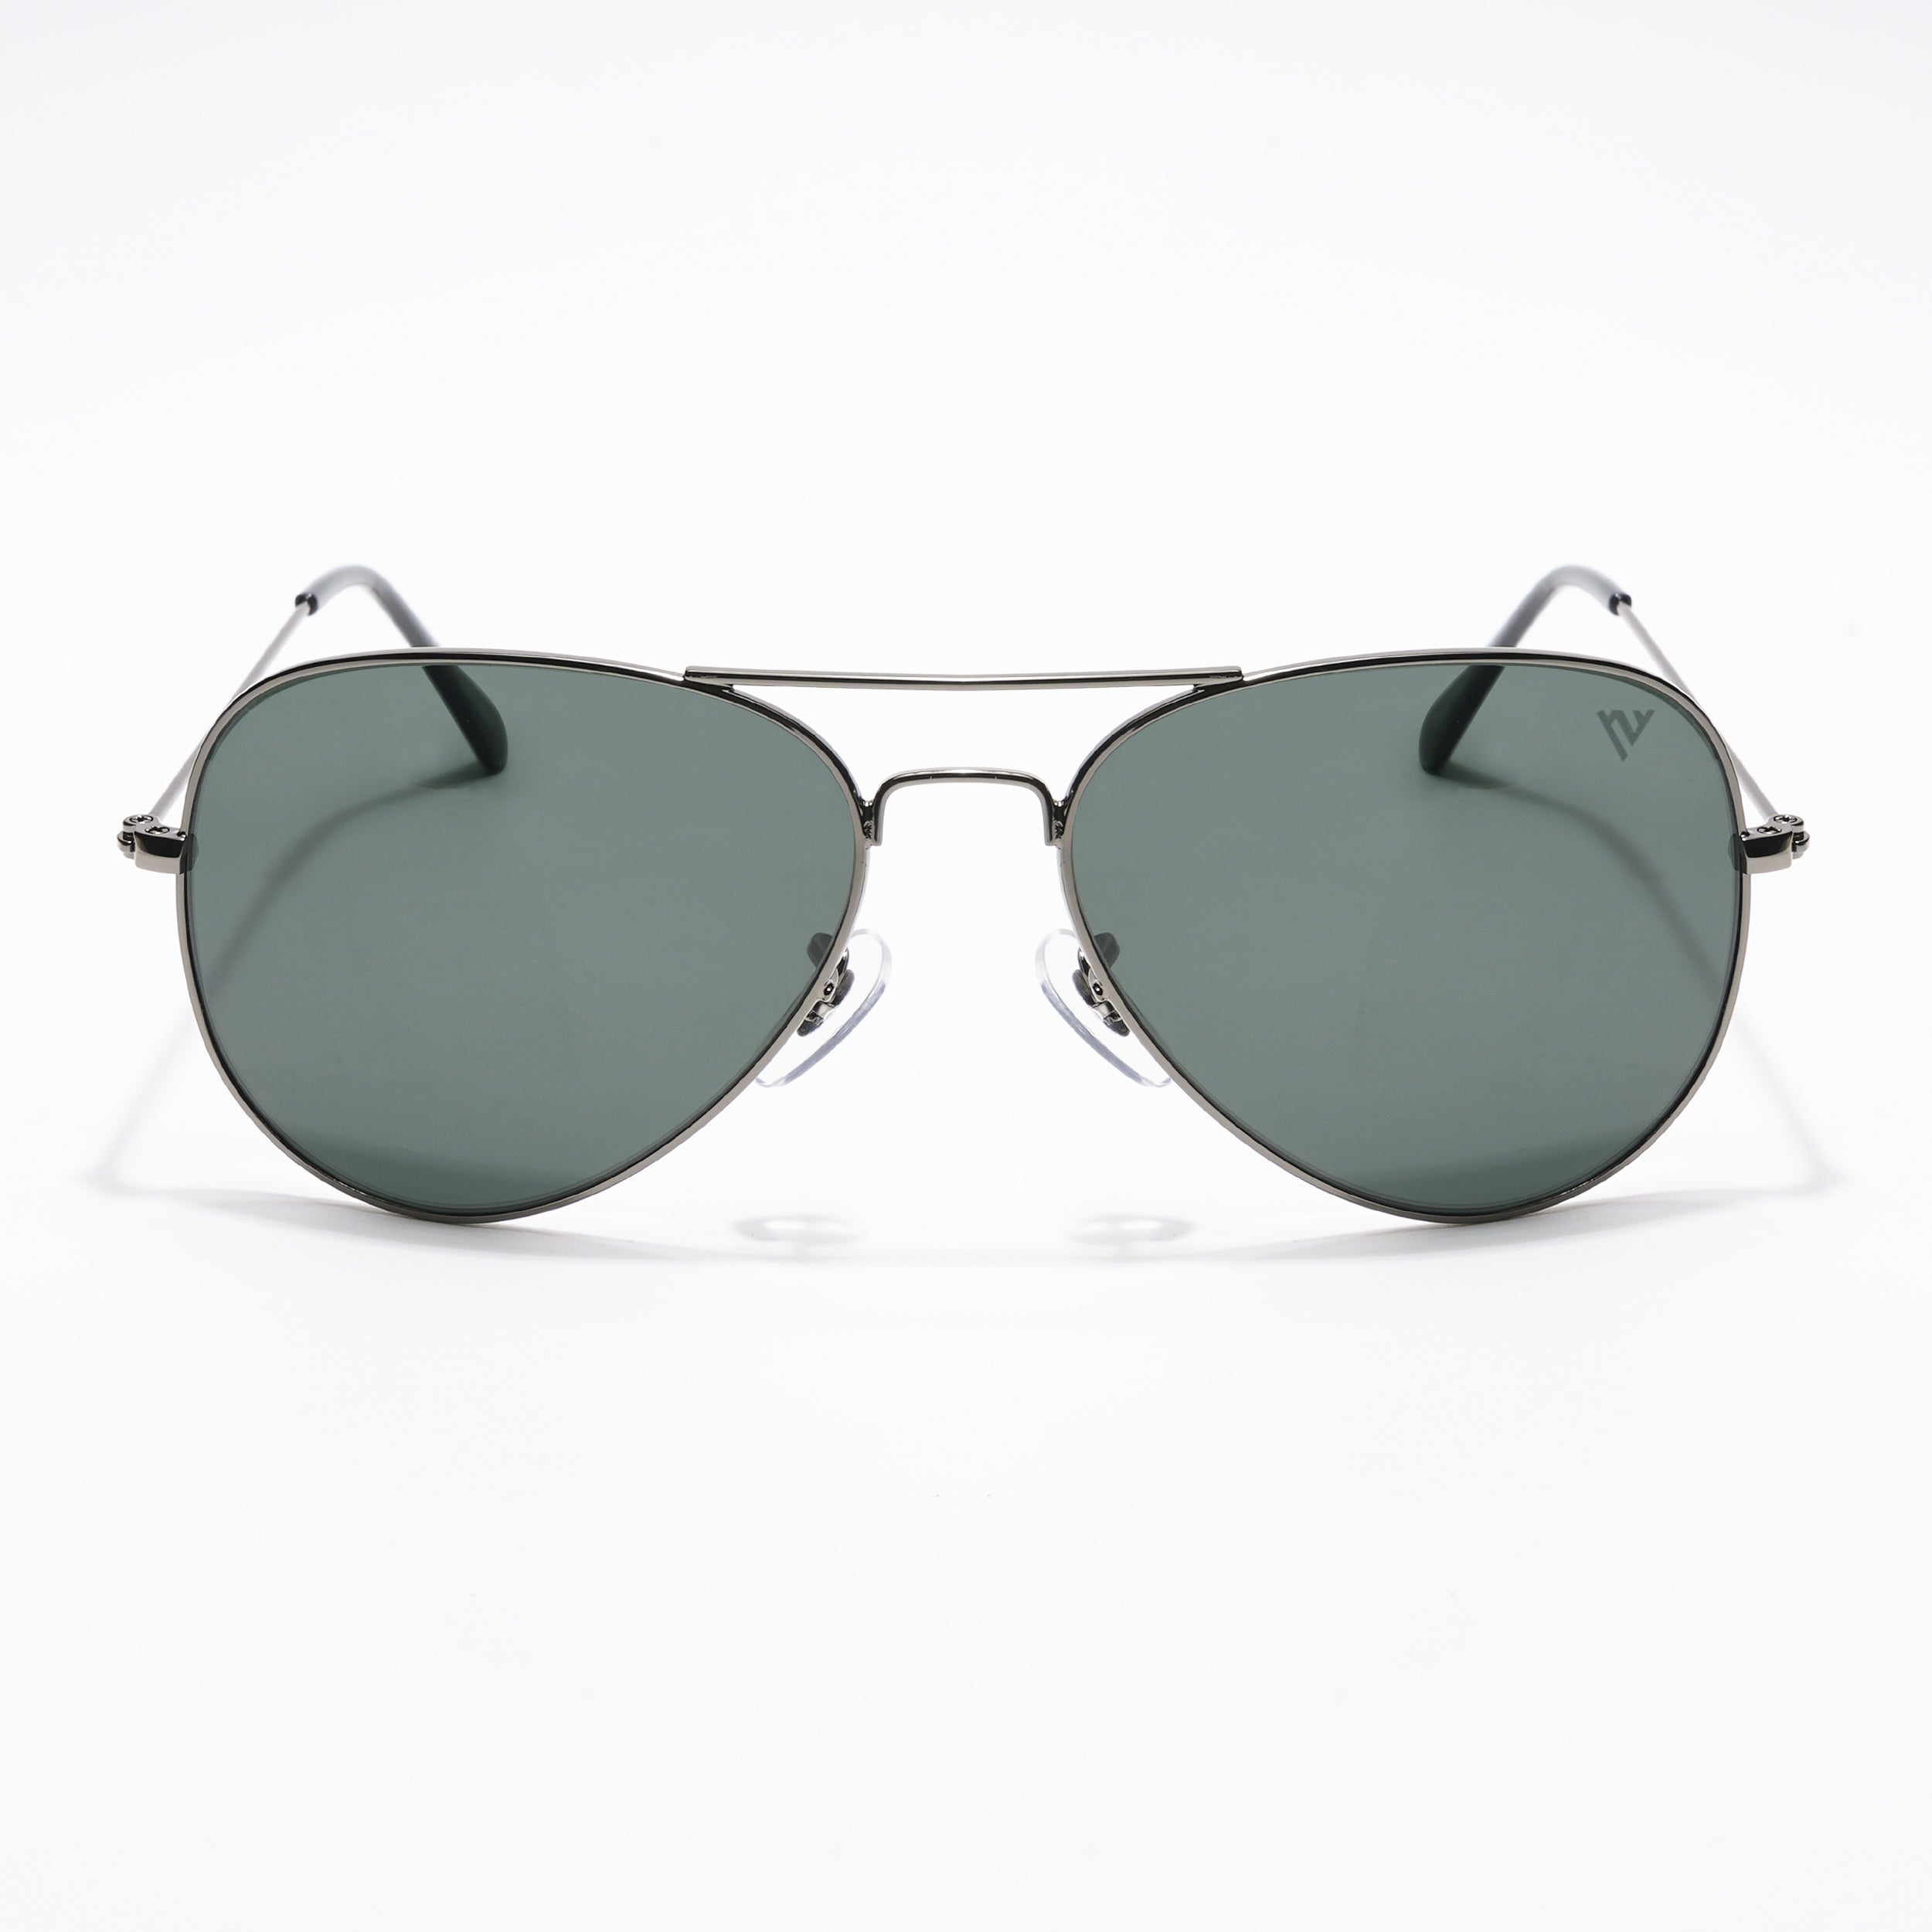 Voyage Black & Grey Aviator Sunglasses - MG2371